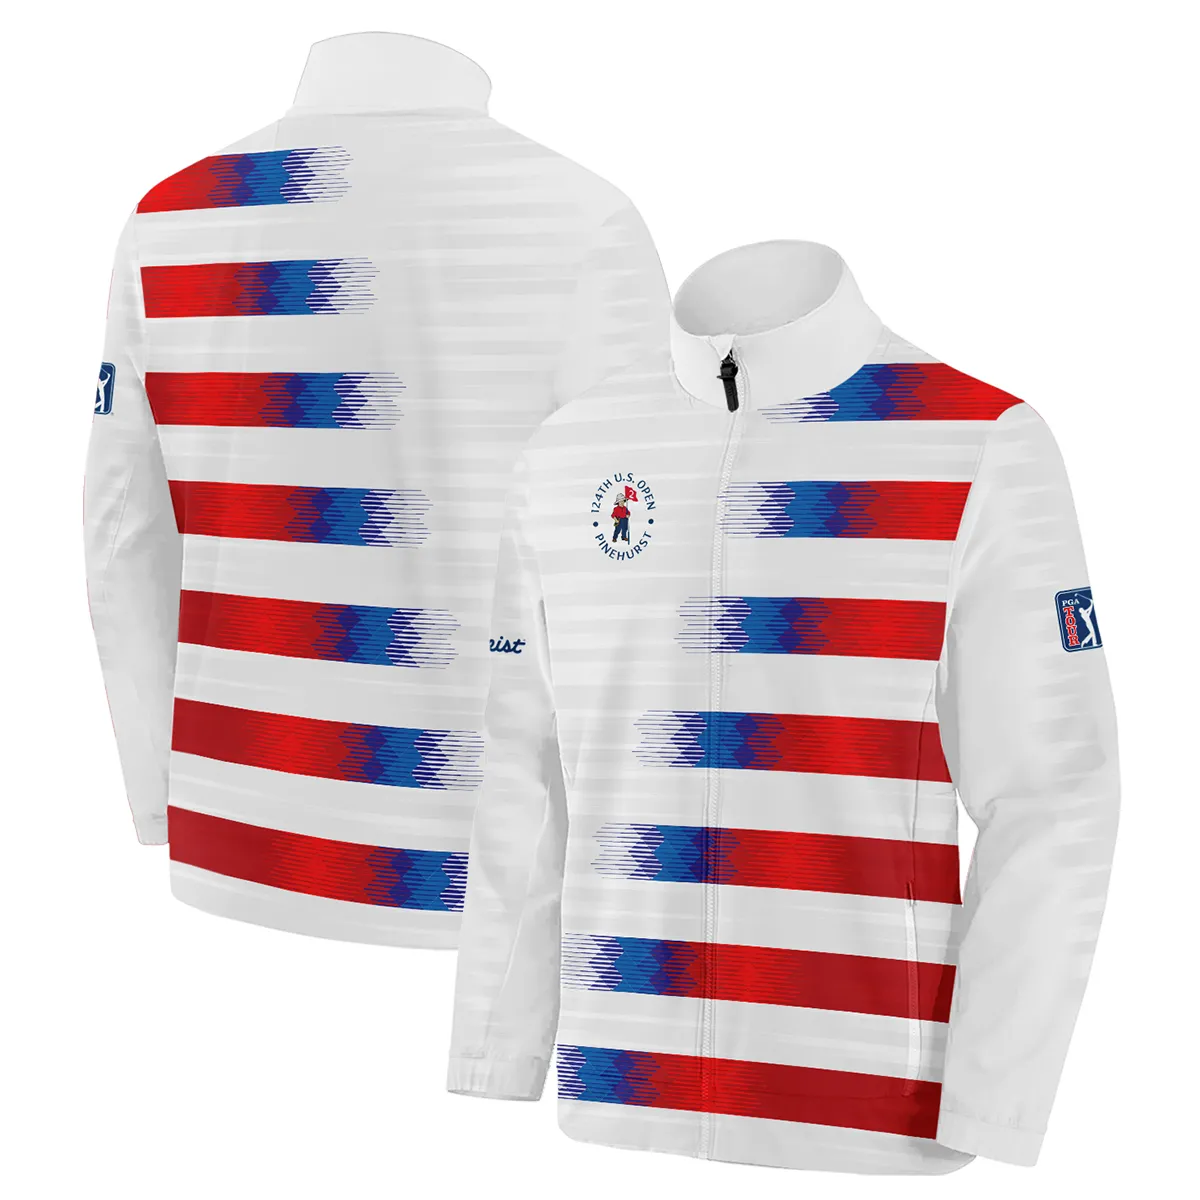 124th U.S. Open Pinehurst Titleist Zipper Polo Shirt Sports Blue Red White Pattern All Over Print Zipper Polo Shirt For Men